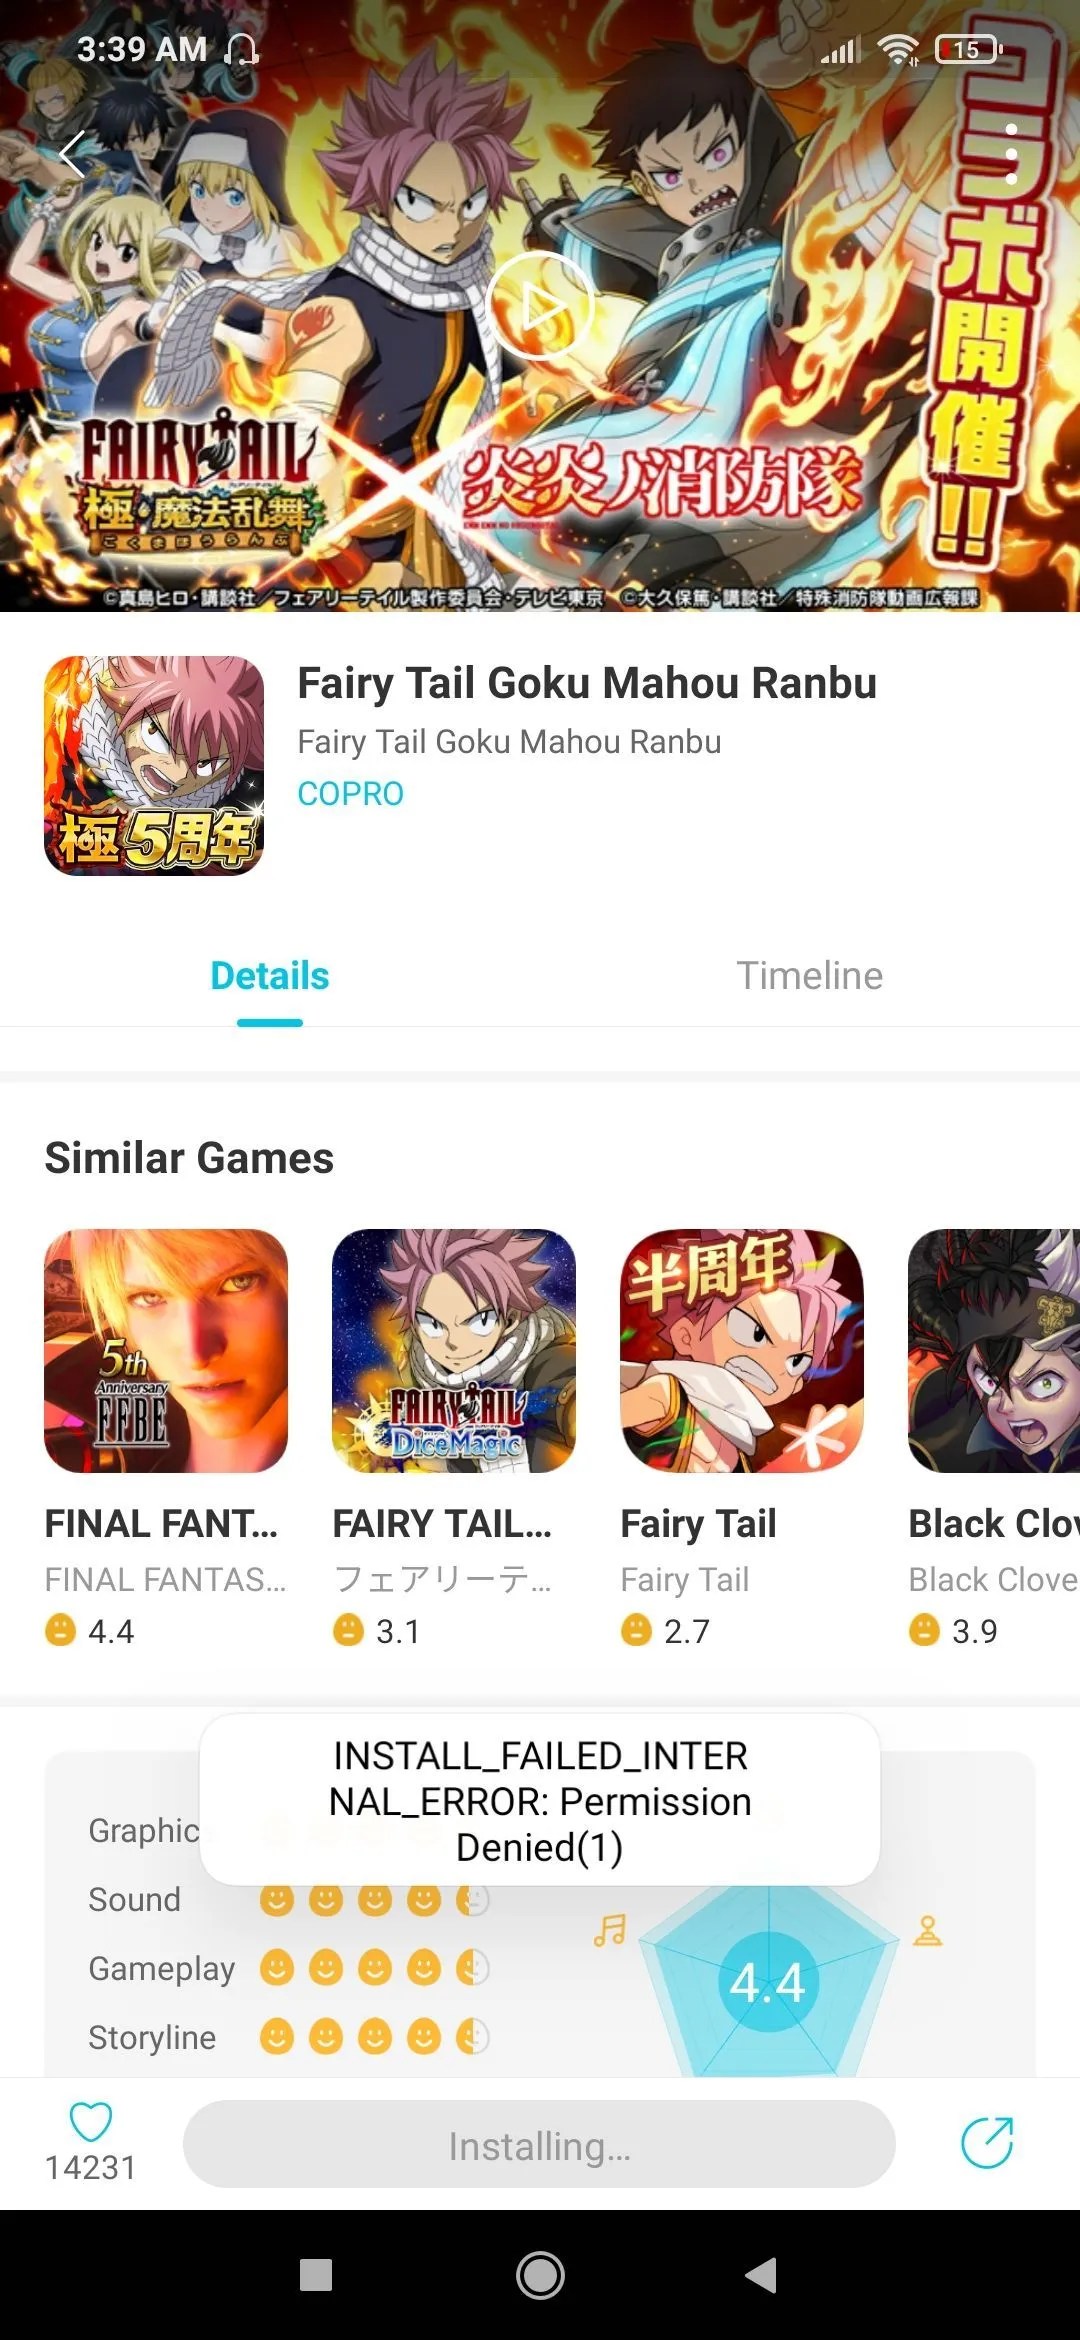 Fairy Tail Goku Mahou Ranbu Shuts Down on April 28 - QooApp News